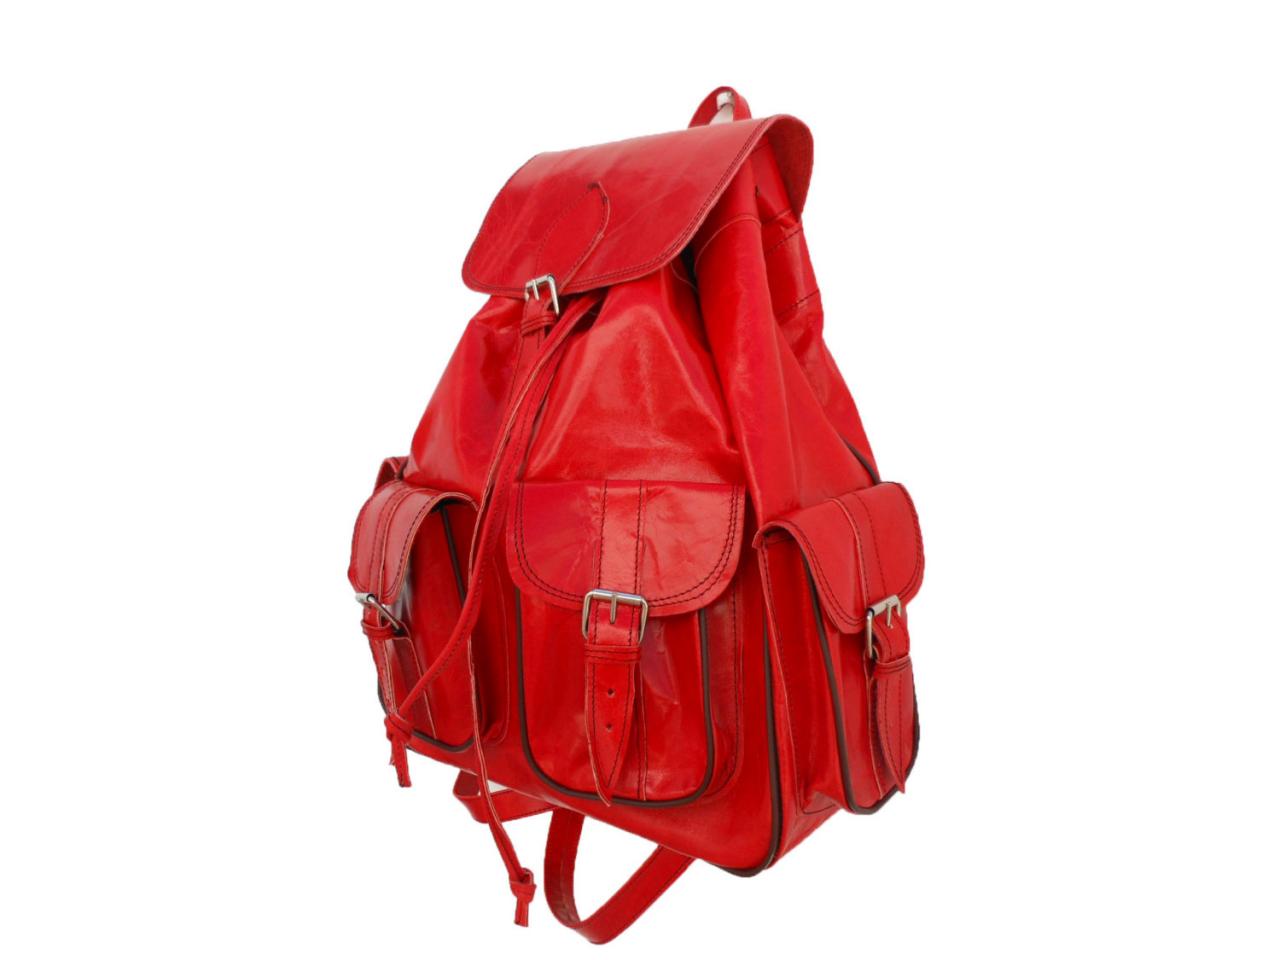 Red Leather Medium Backpack Satchel Bag Handmade Soft Leather School College Travel Picnic Weekend Bag